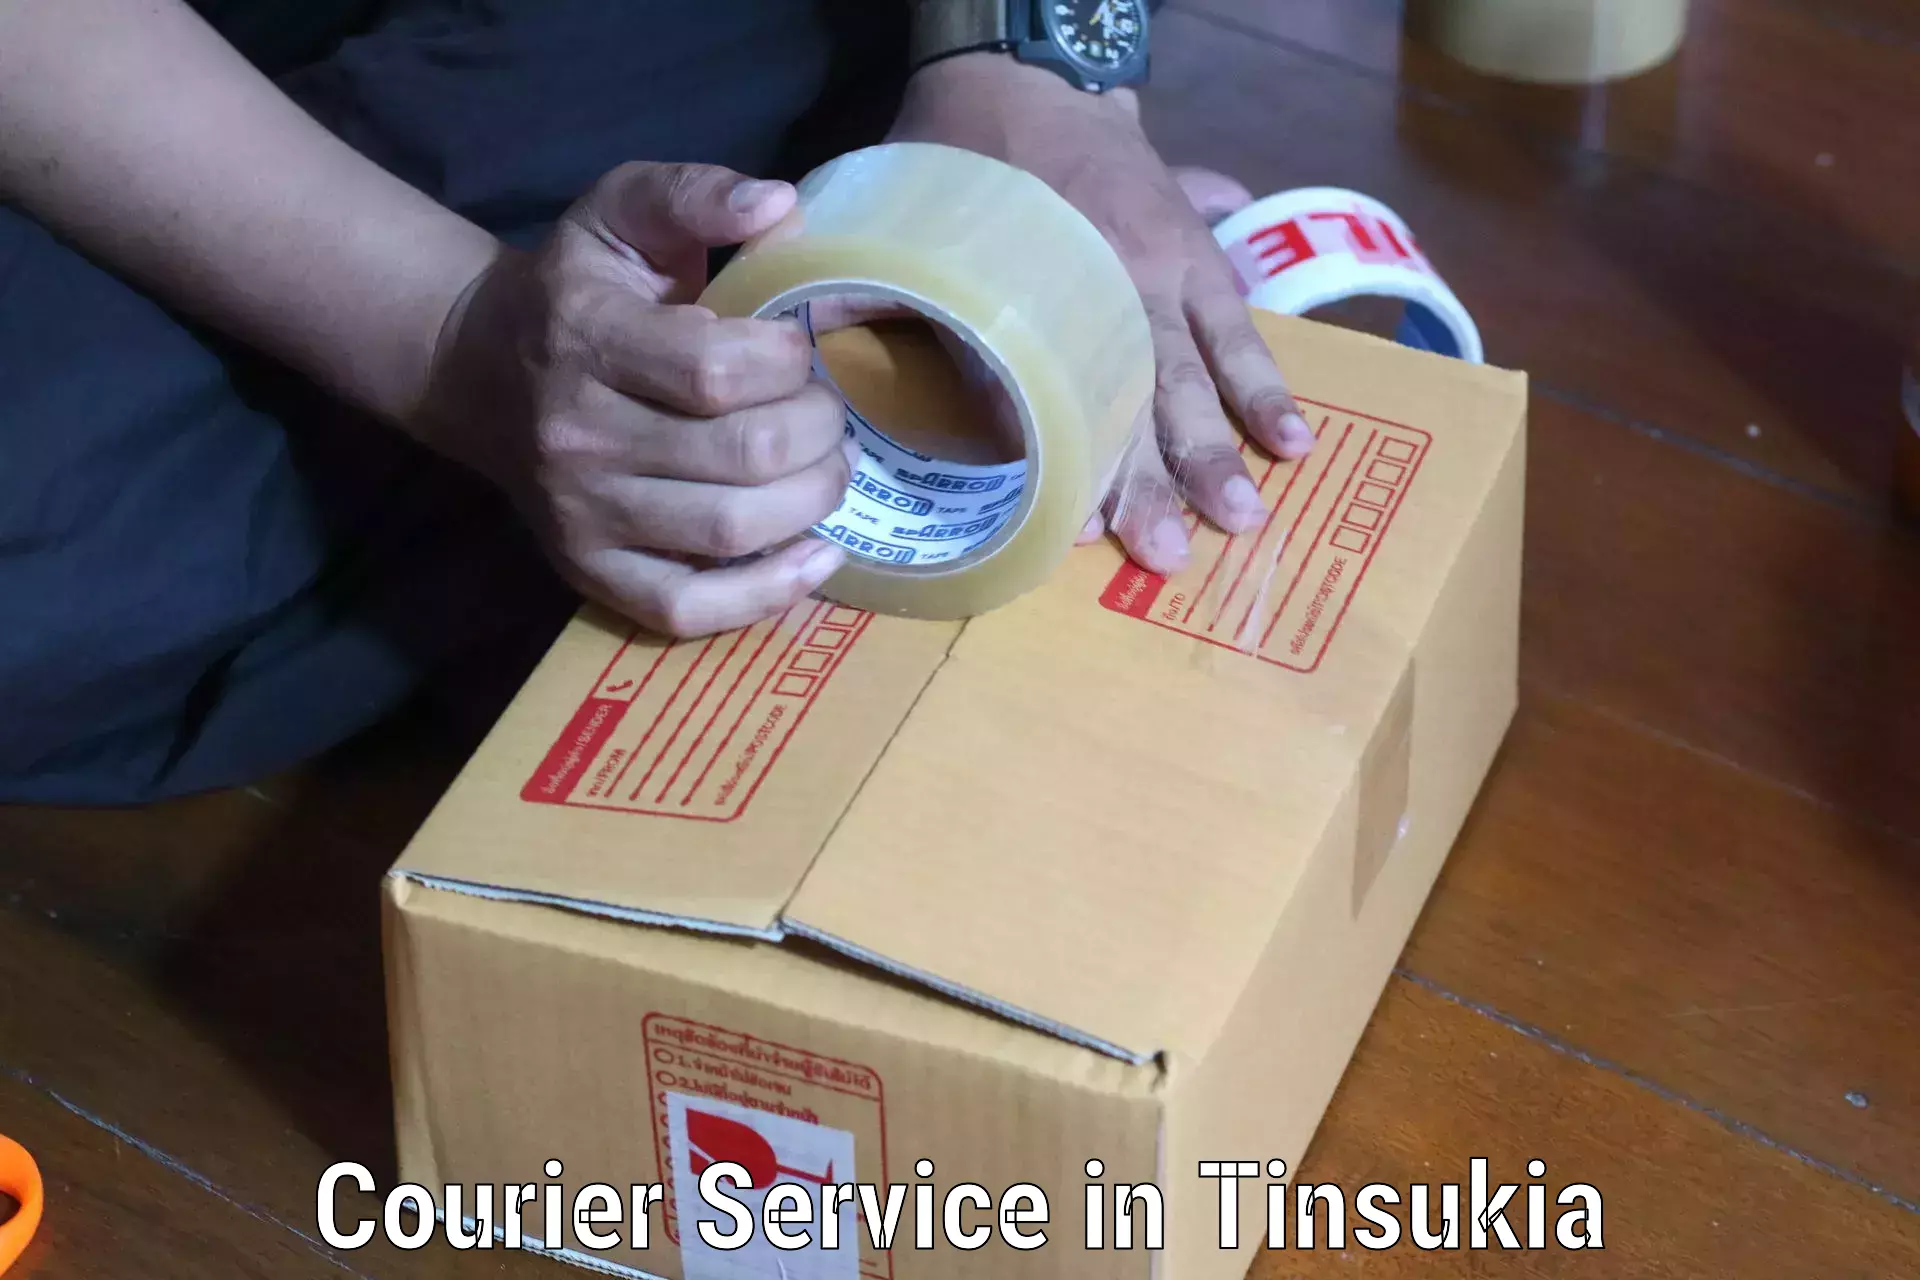 Quick booking process in Tinsukia